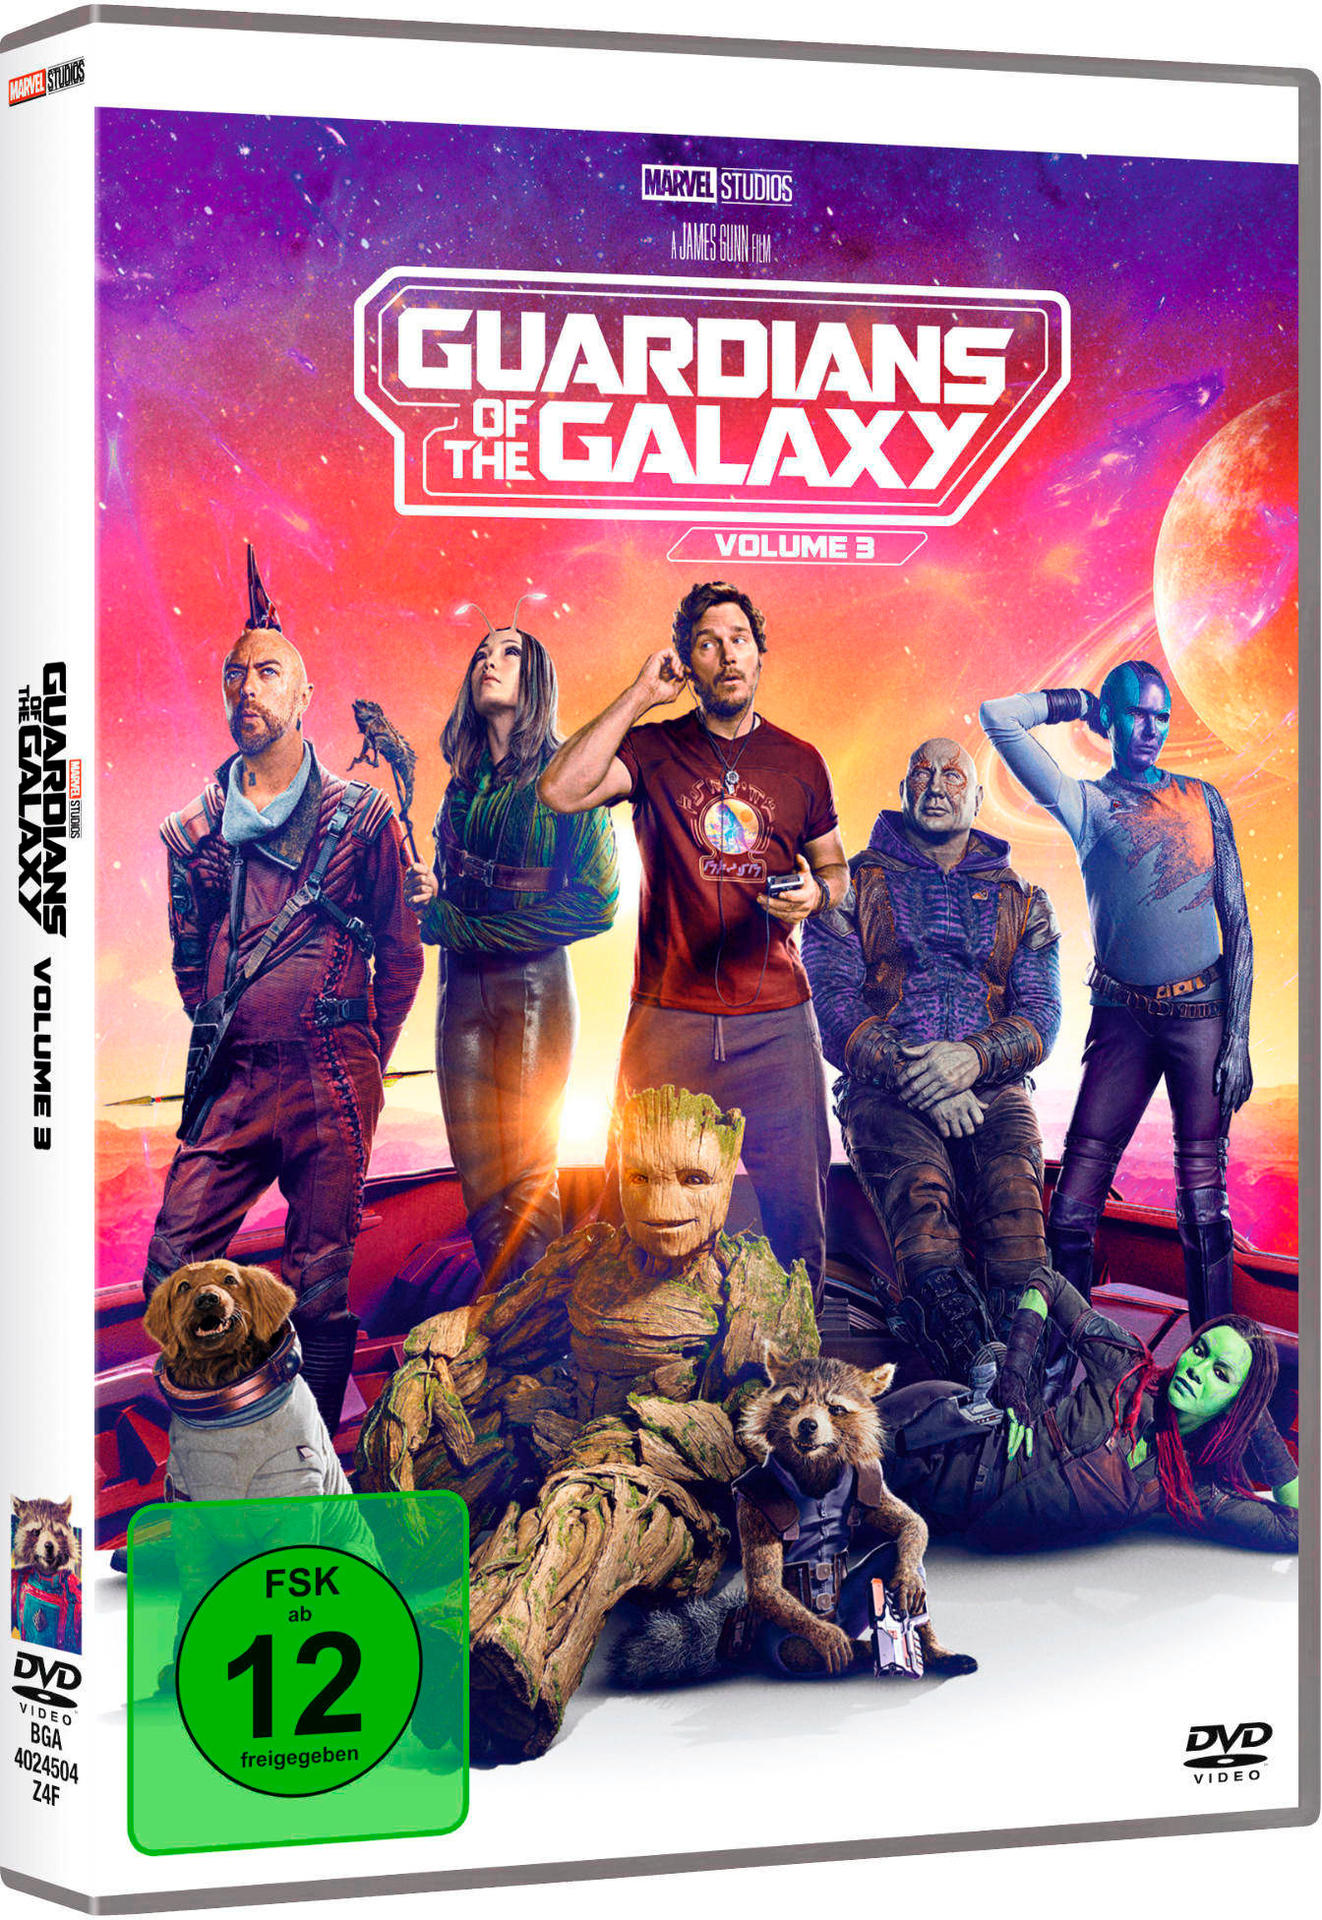 Guardians of the Galaxy DVD Vol. 3